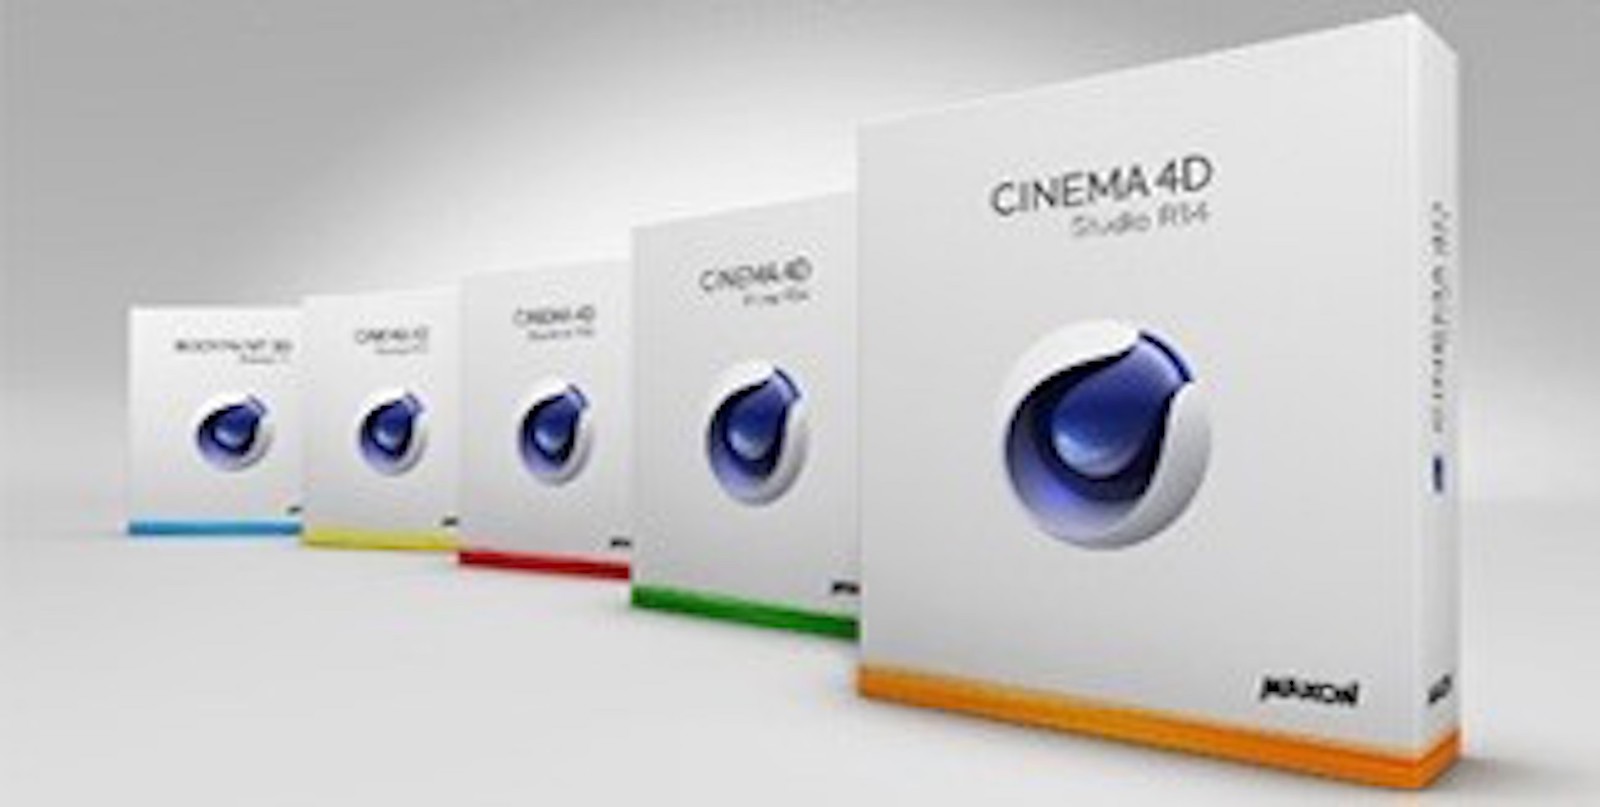 Cinema4D Release 14